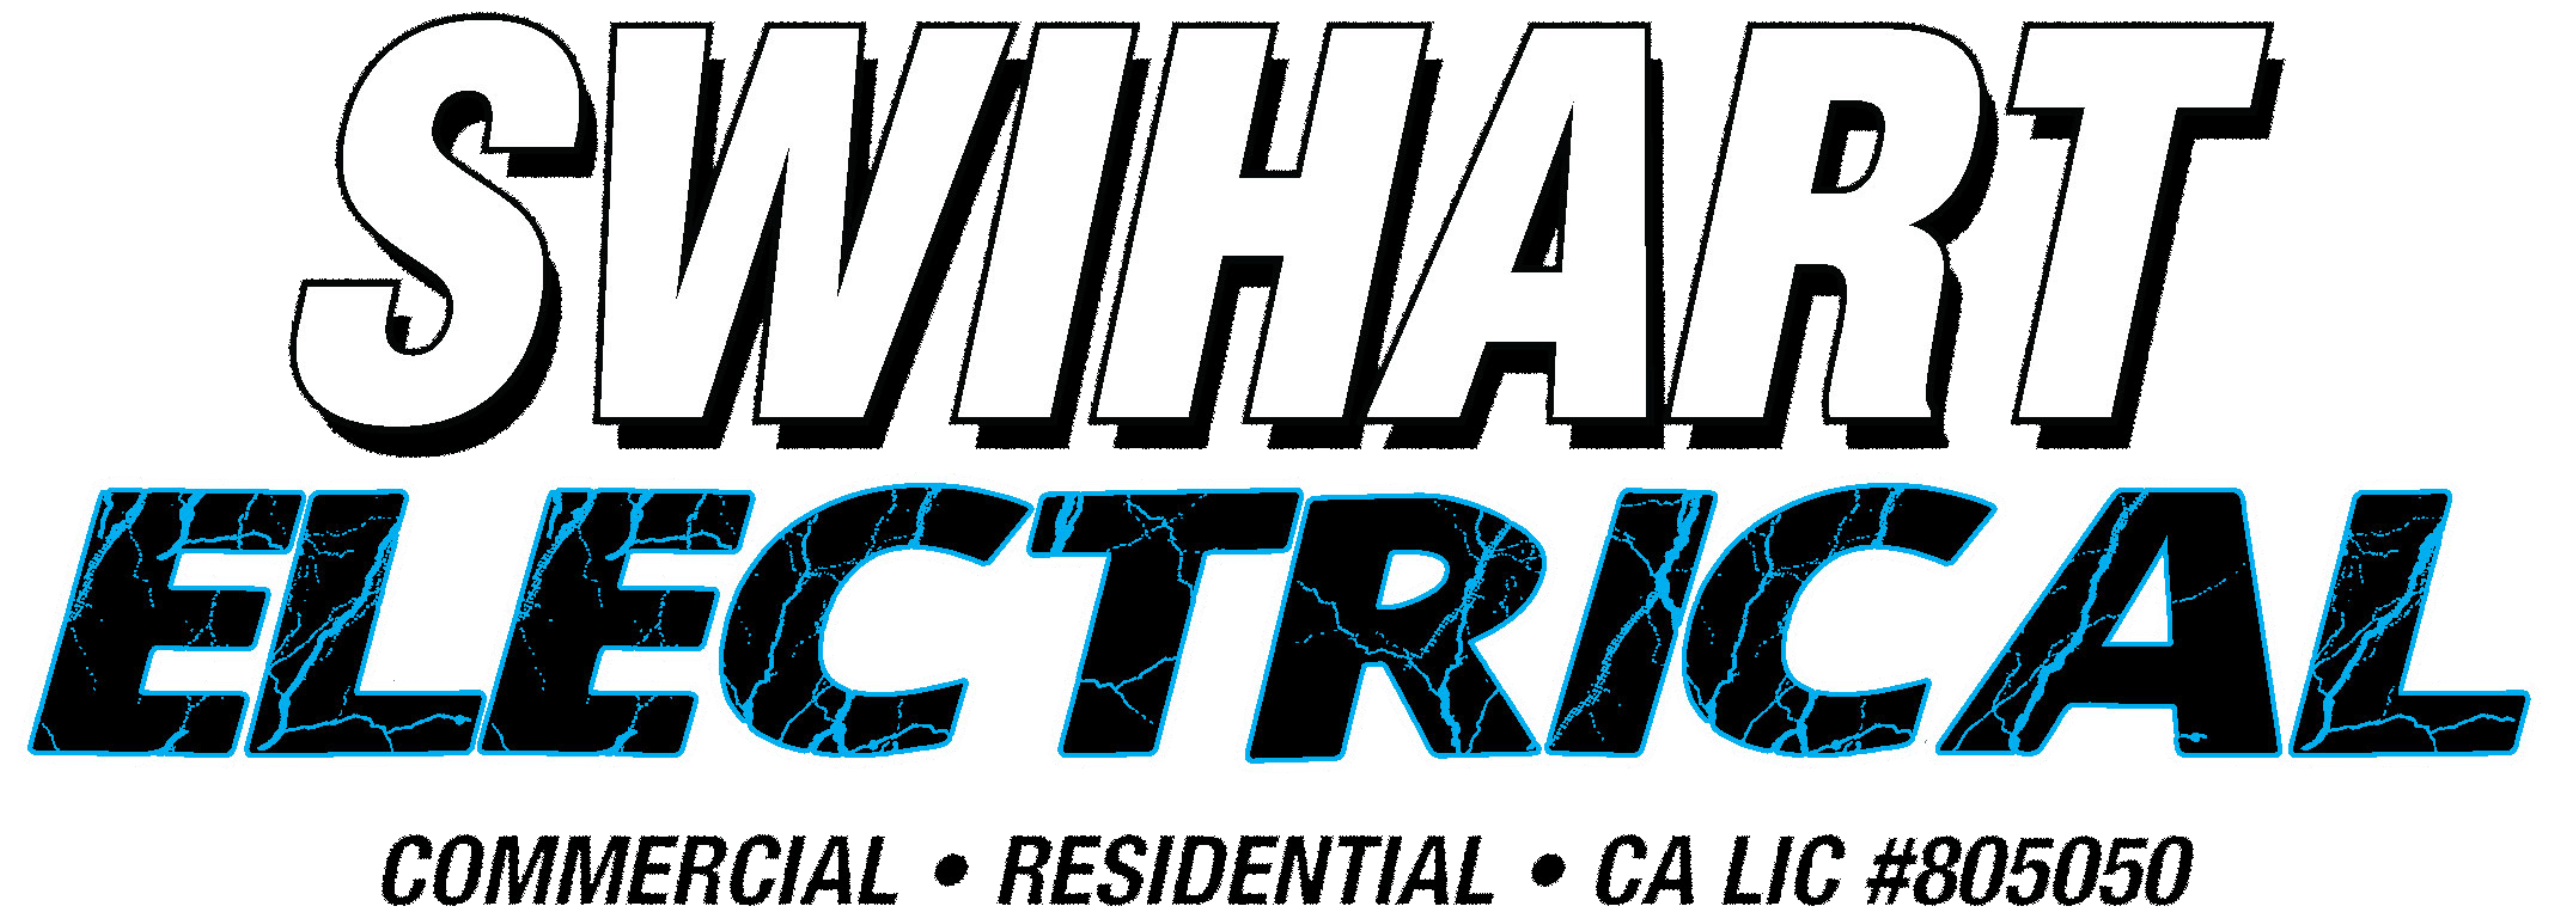 Swihart Enterprises & Electrical Logo